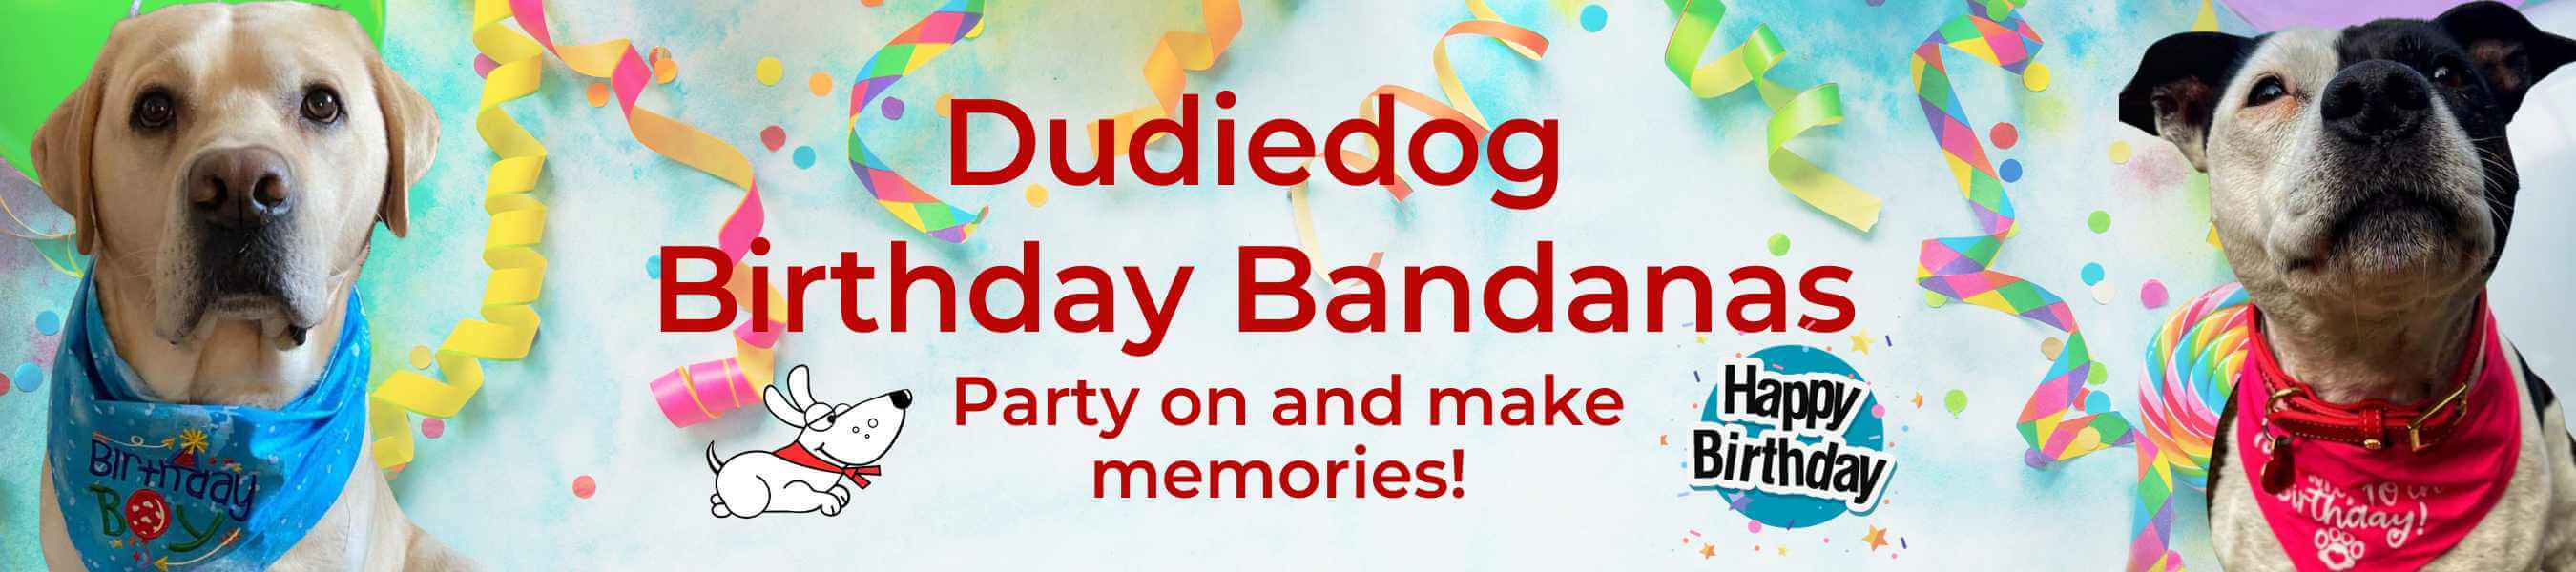 birthday dog bandanas at dudiedog, custom celebration tie on dog scarf